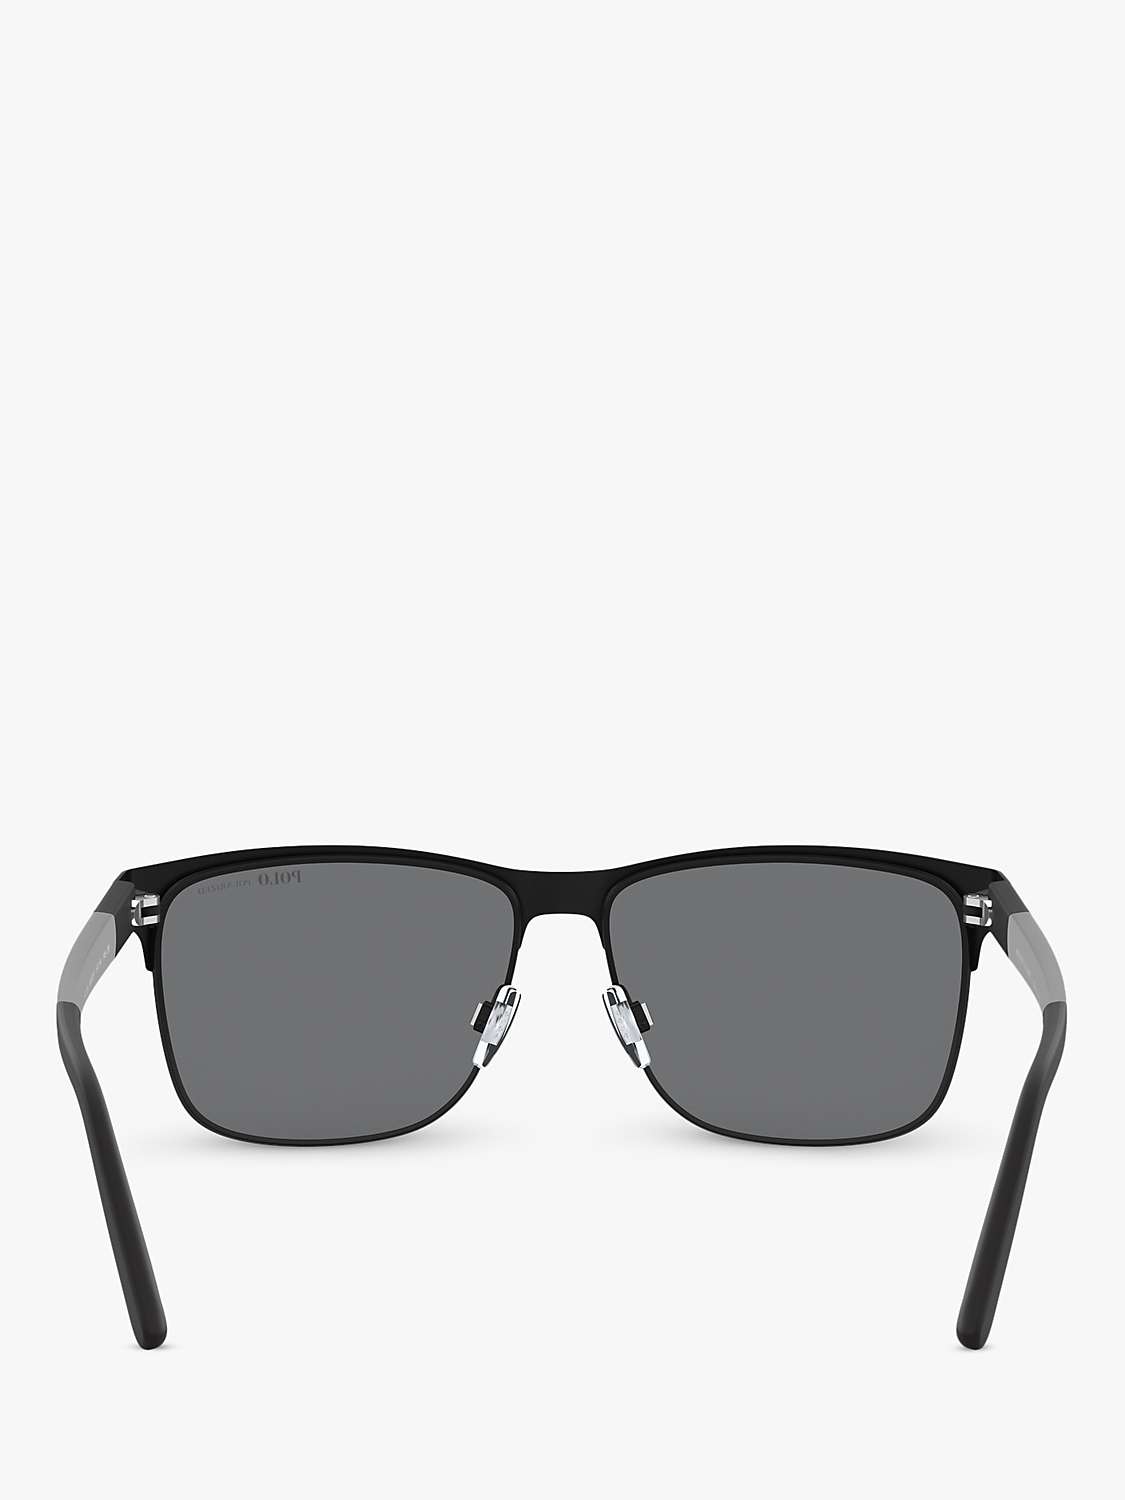 Buy Ralph Lauren PH3128 Men's Square Sunglasses, Black/Grey Online at johnlewis.com